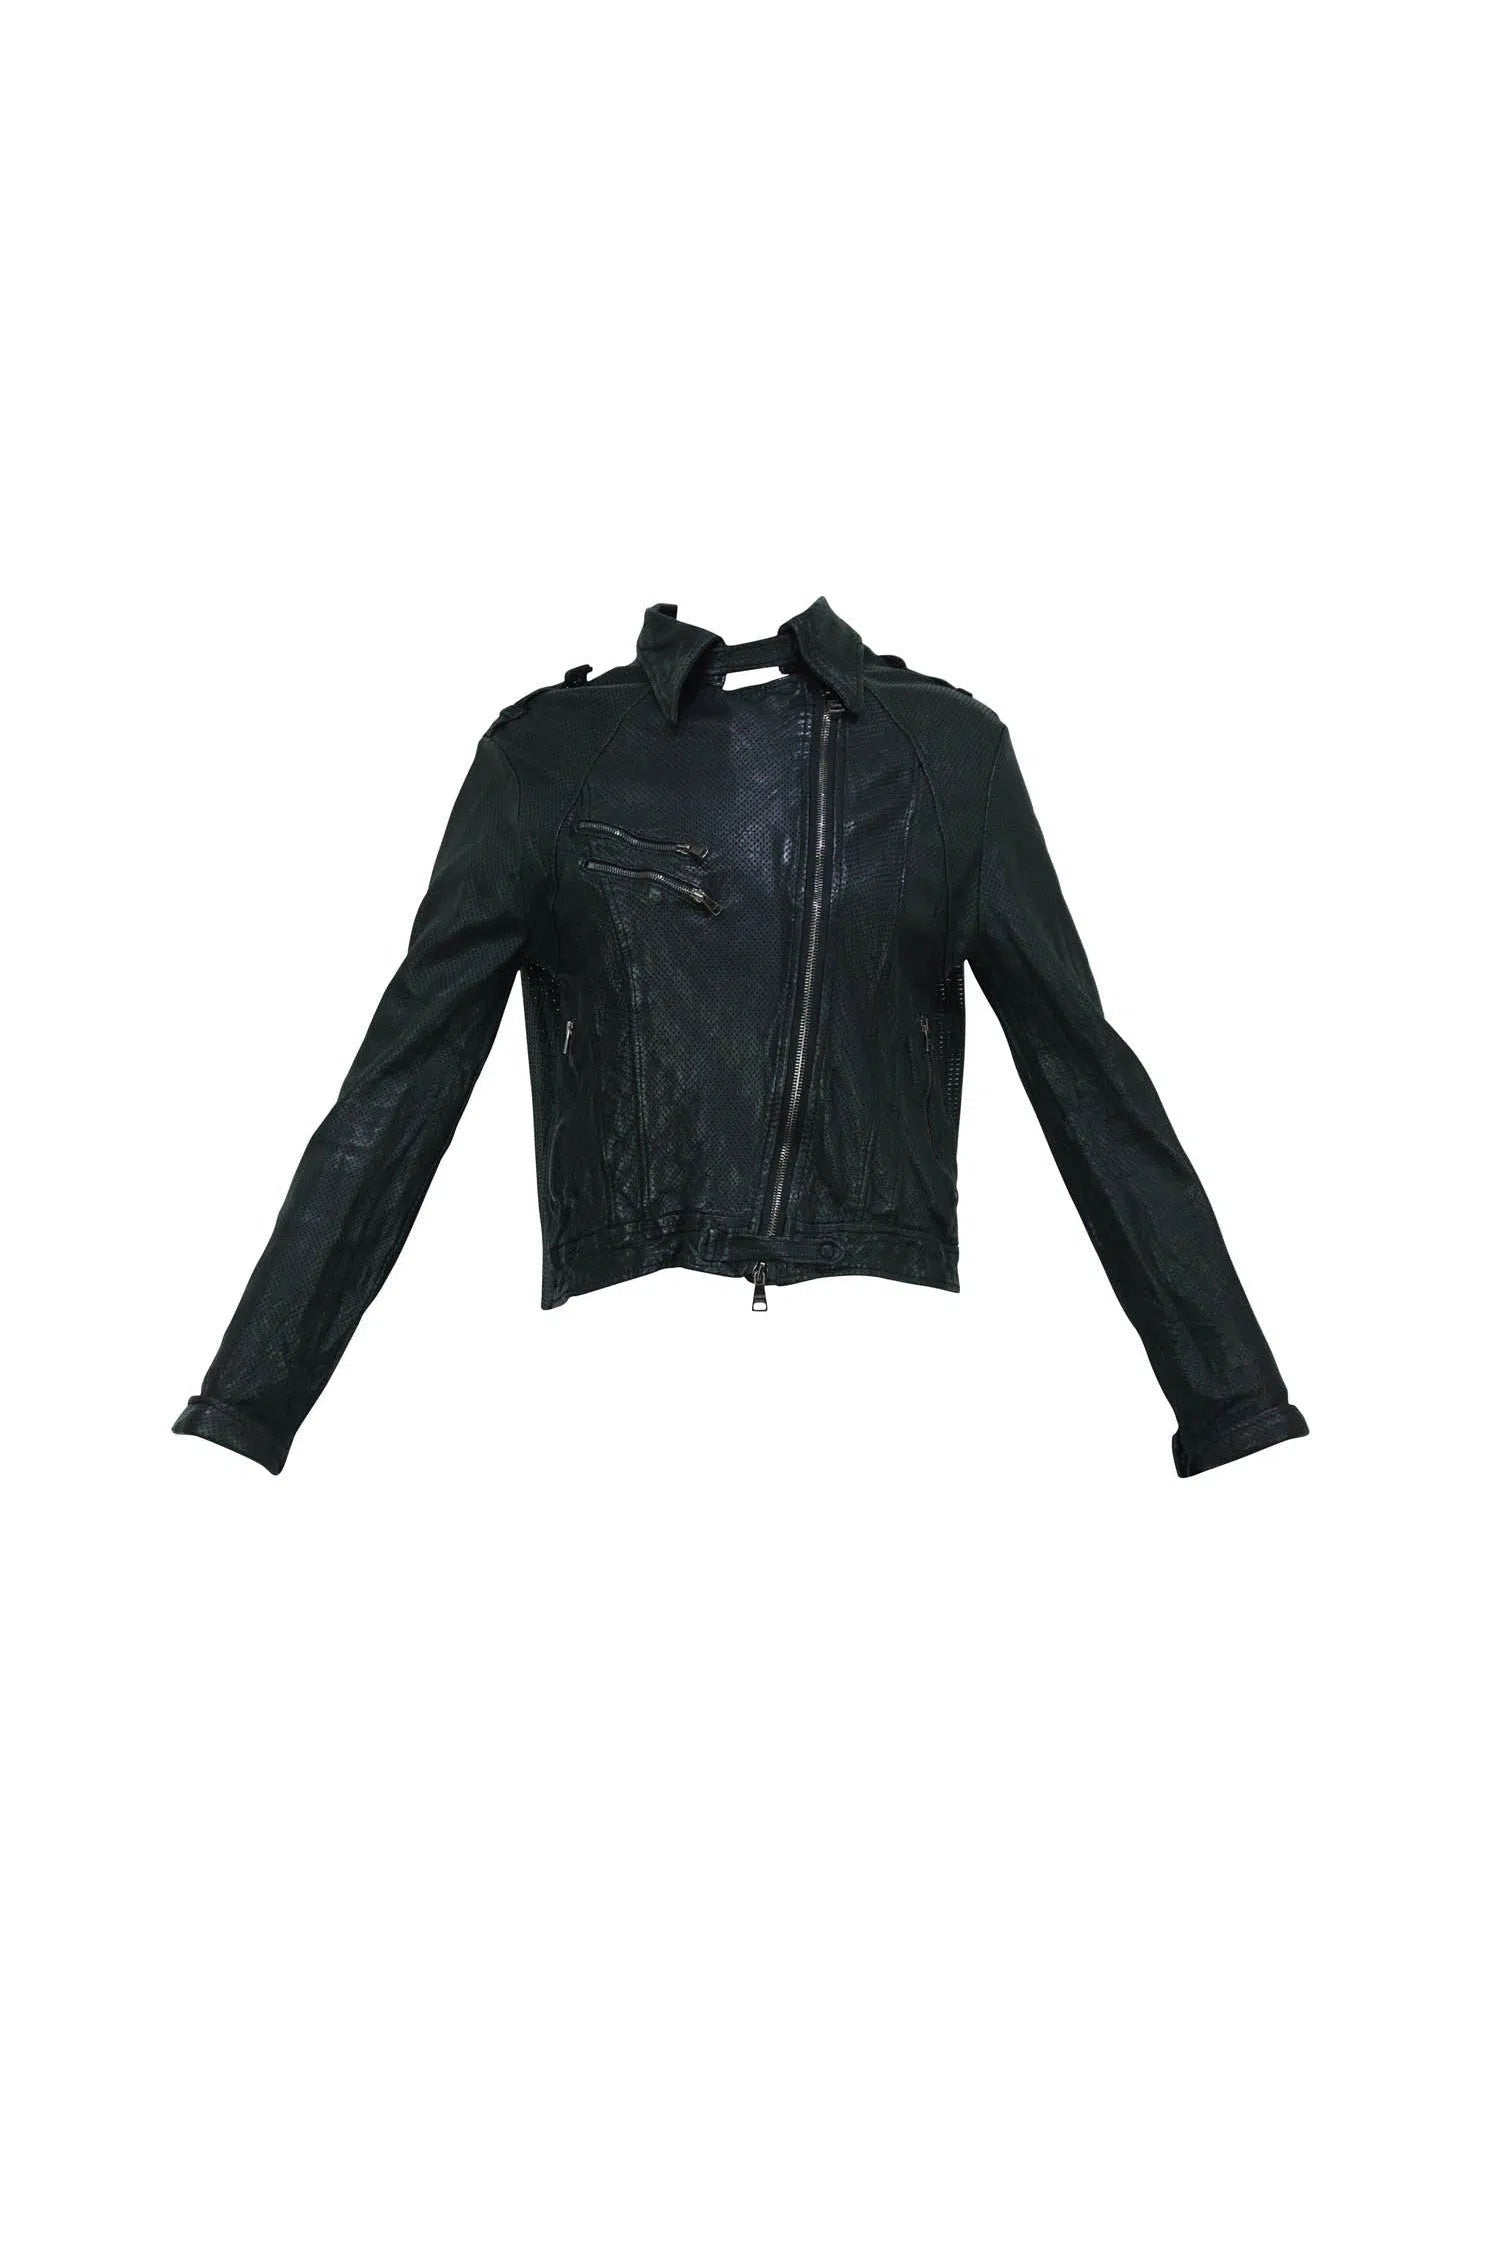 Giorgio Brato Preforated Leather Motorcycle Jacket